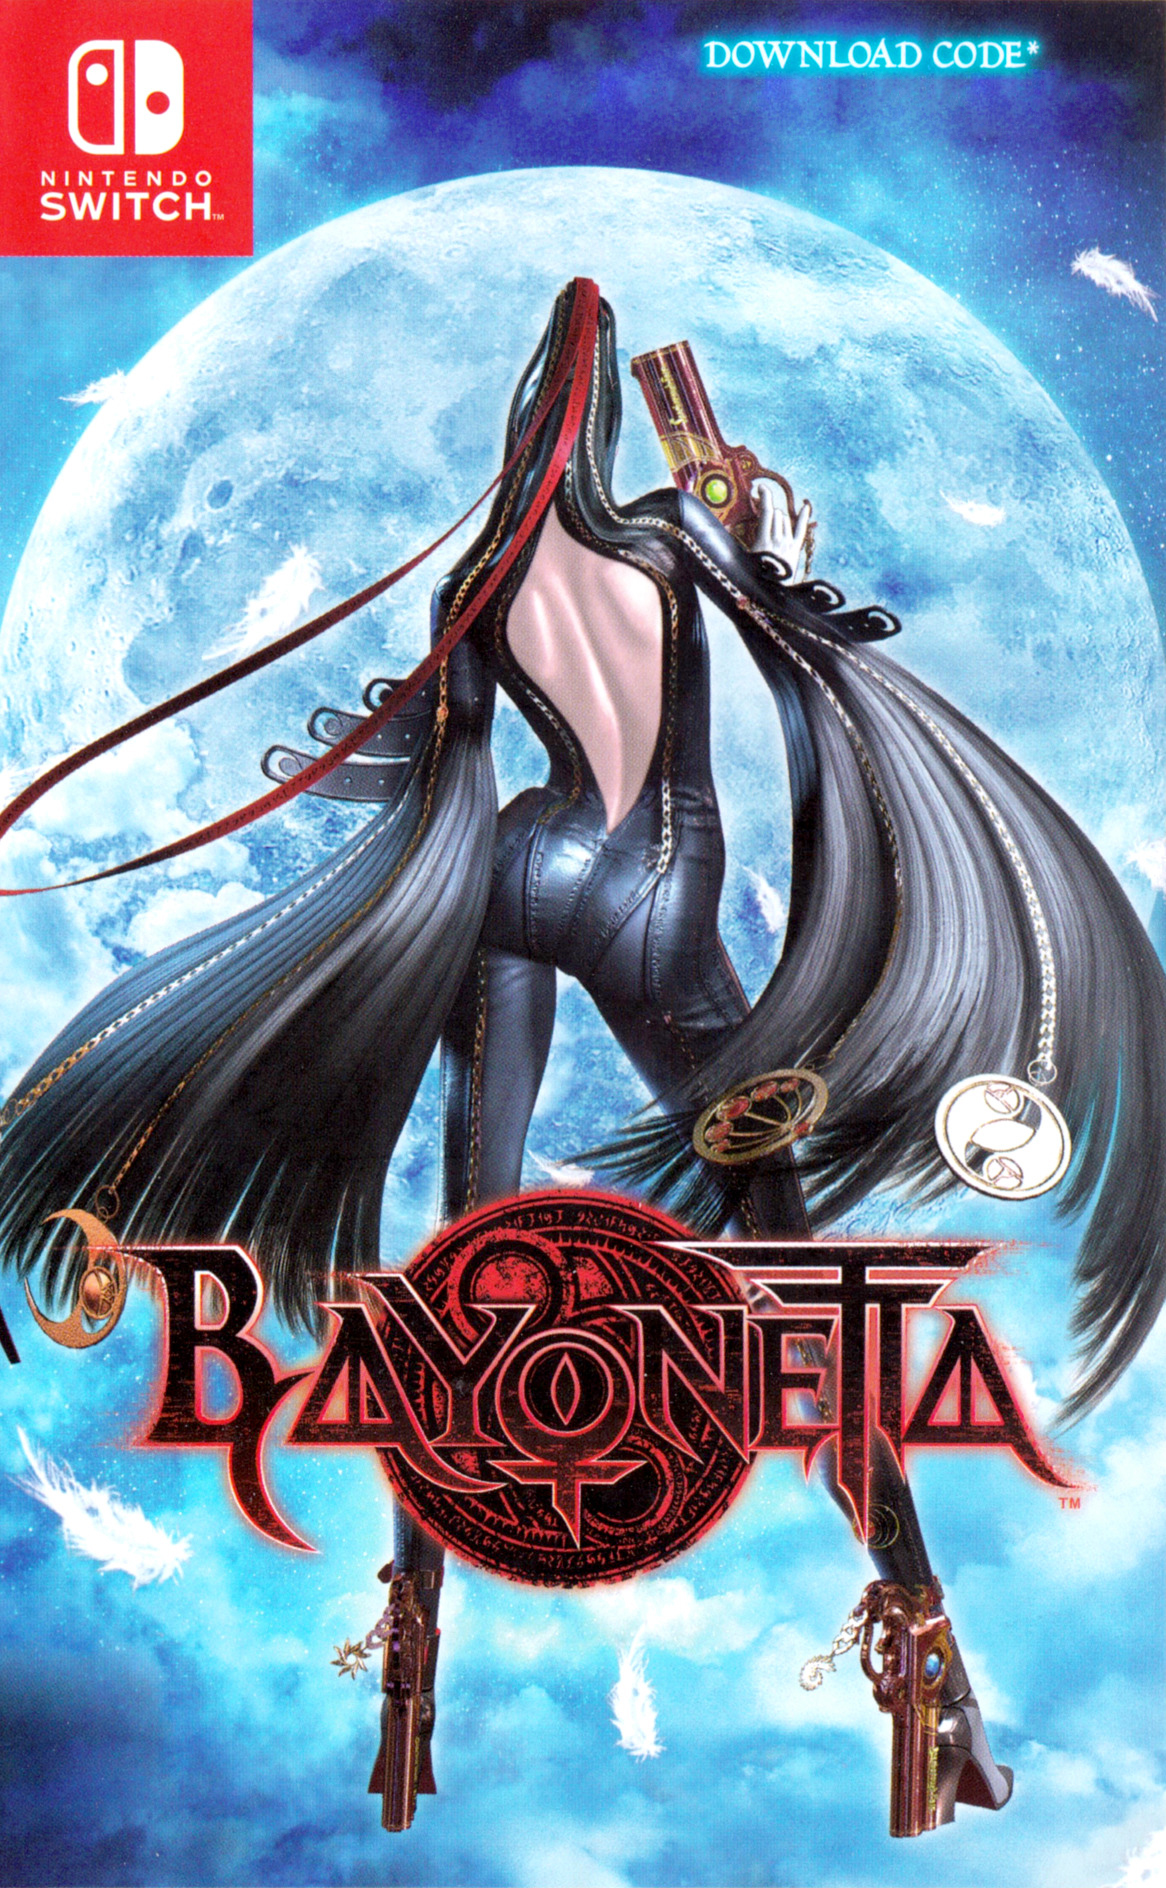 bayonetta special edition download free